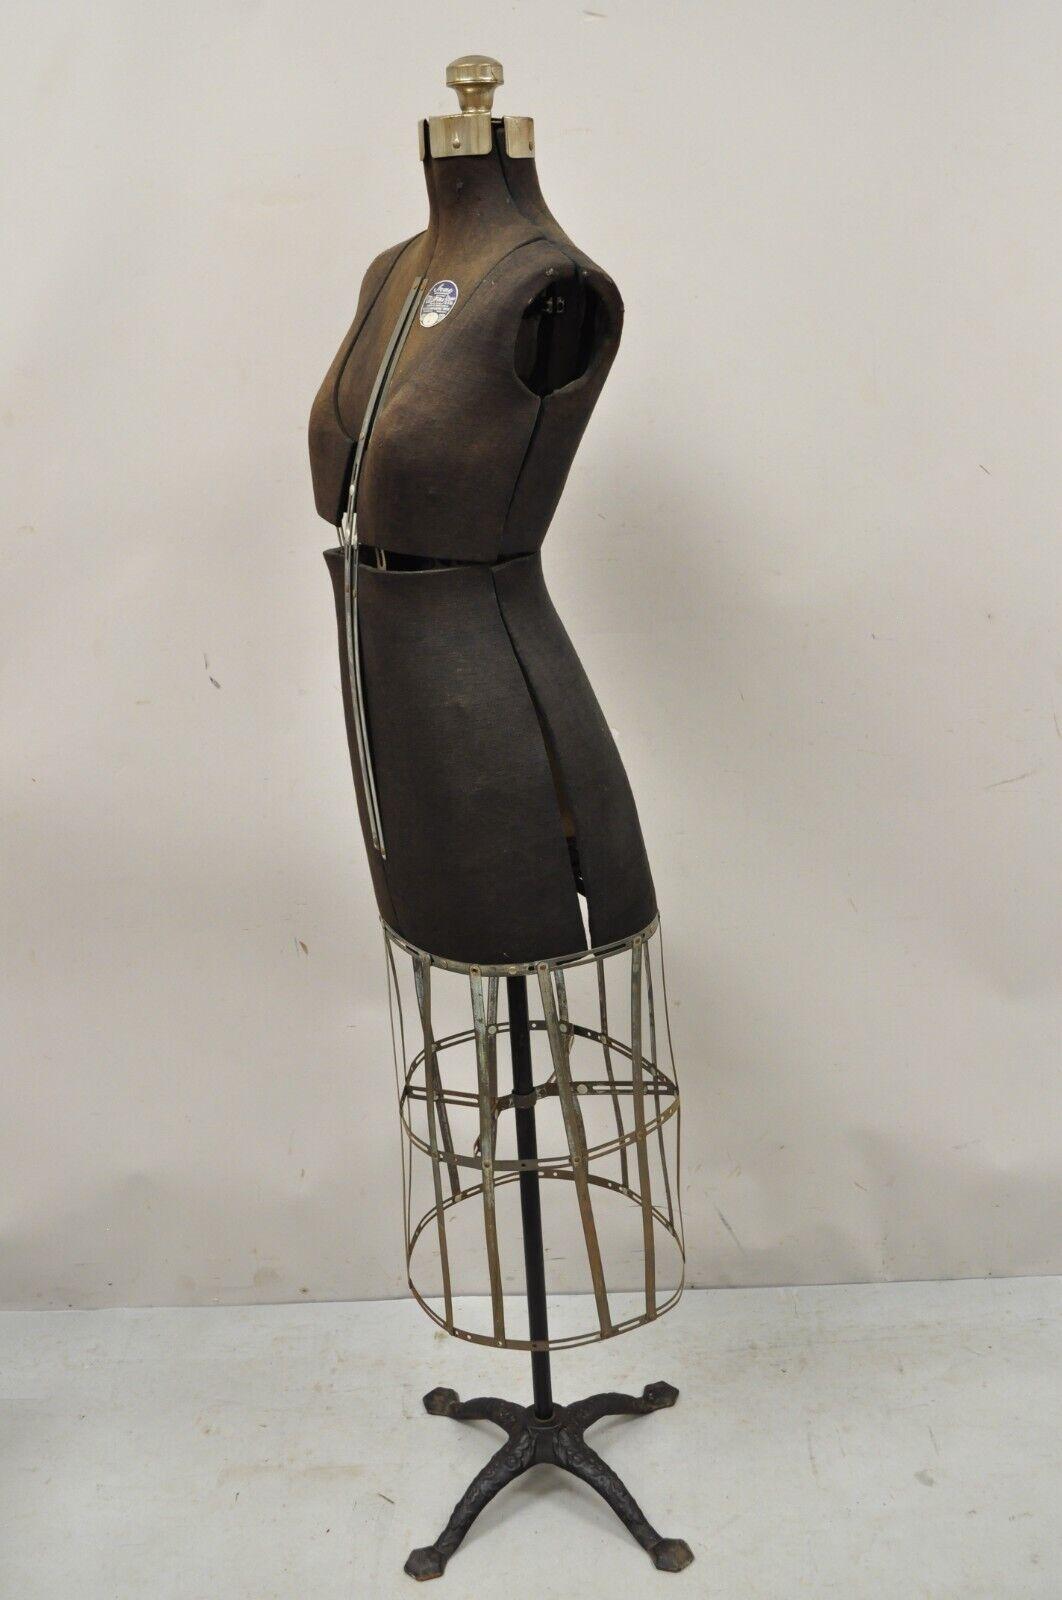 Vintage acme adjustable collapsible dress form mannequin size A. Circa mid 20th century. Measurements: 61